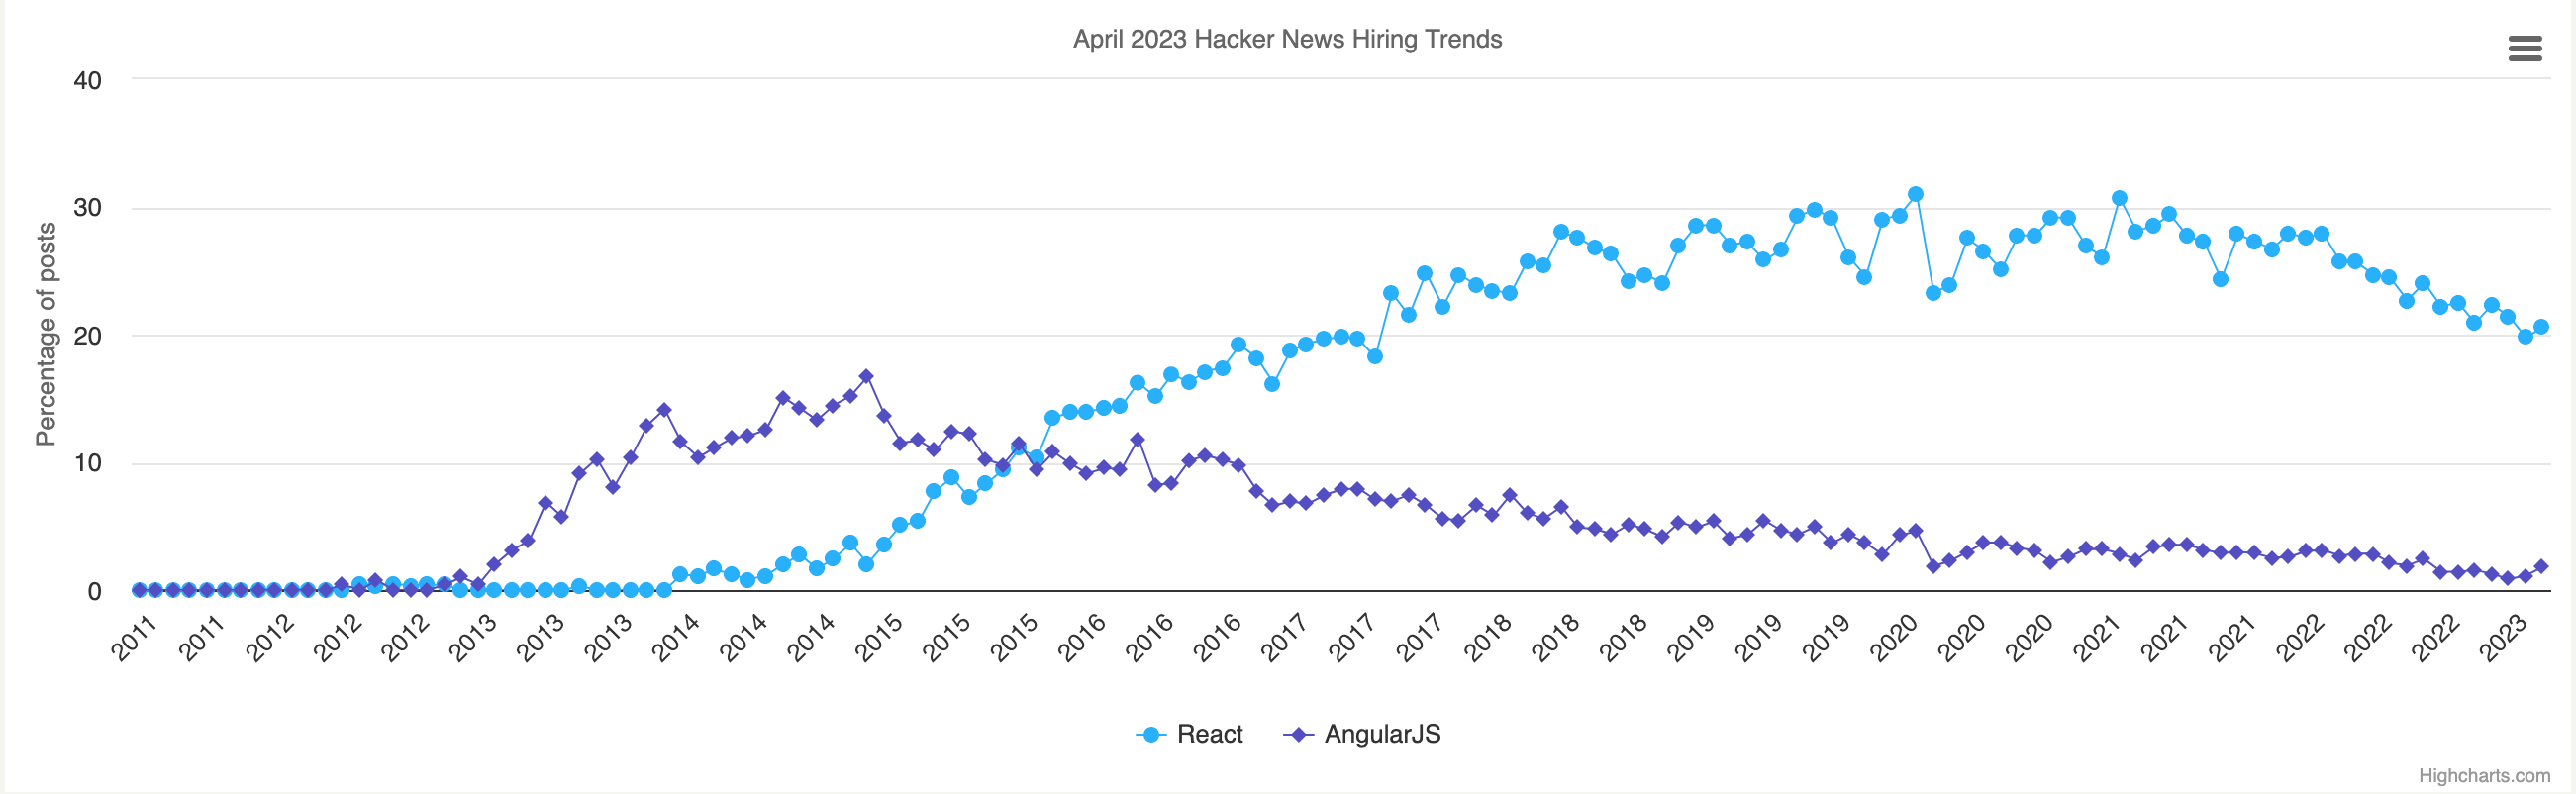 A job market comparison of Angular vs React